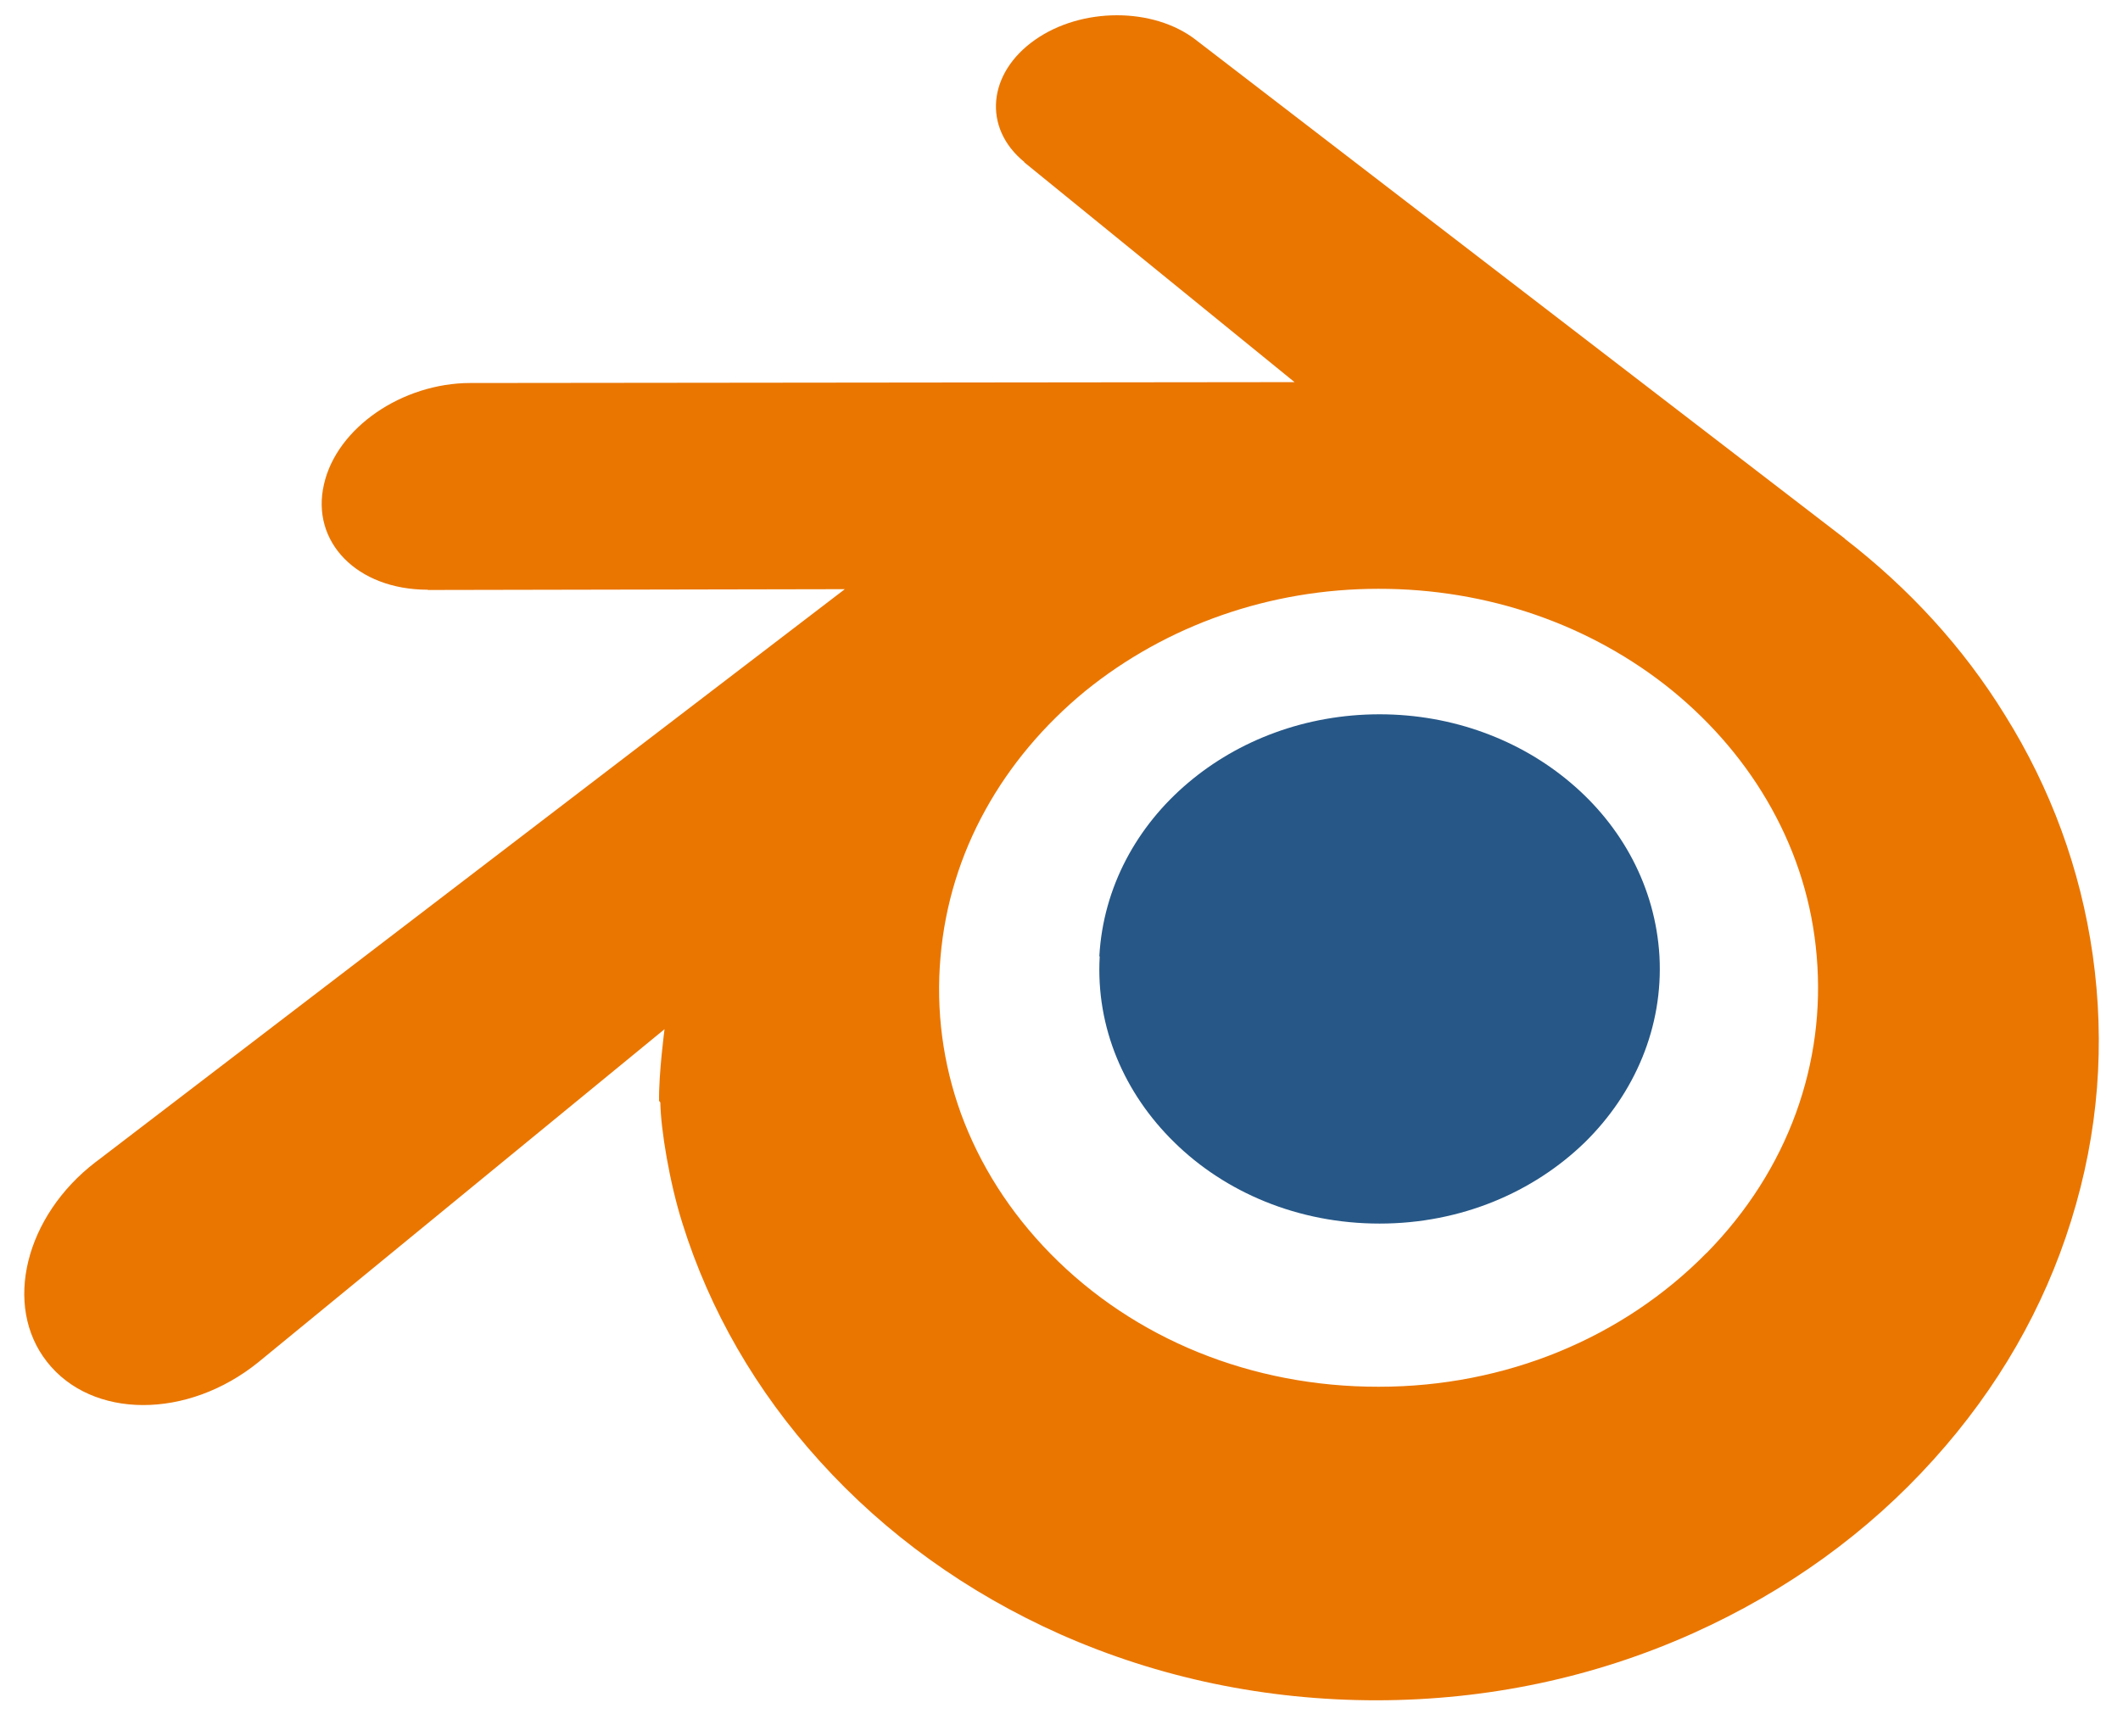 TypeScript logo